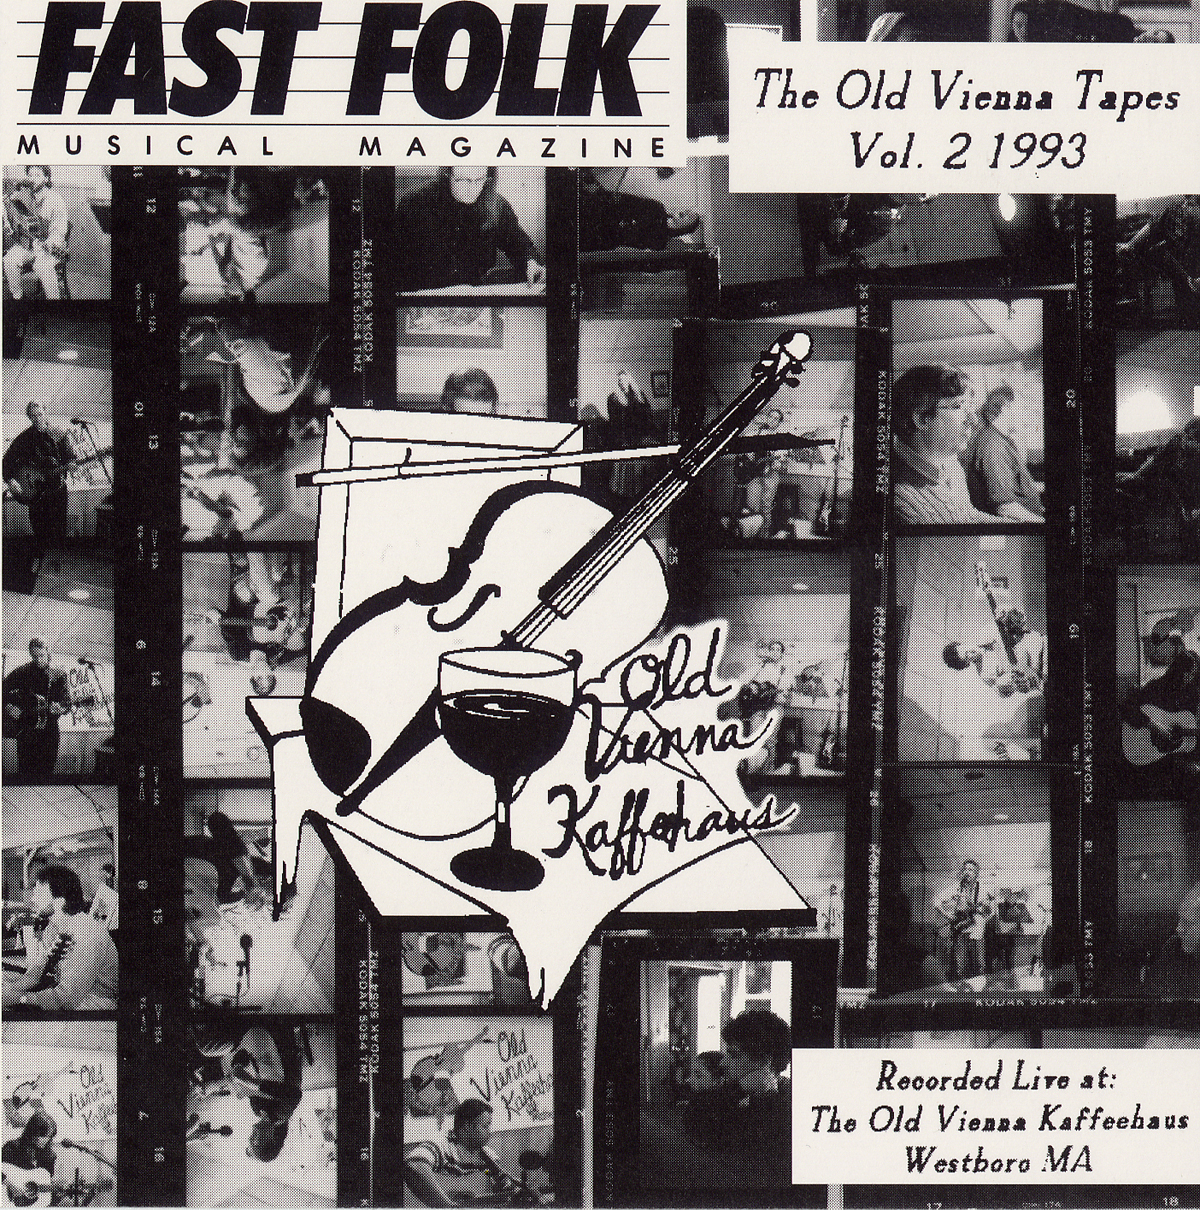 FAST FOLK MUSICAL MAGAZINE (4) OLD VIEN 7 / VARIOU